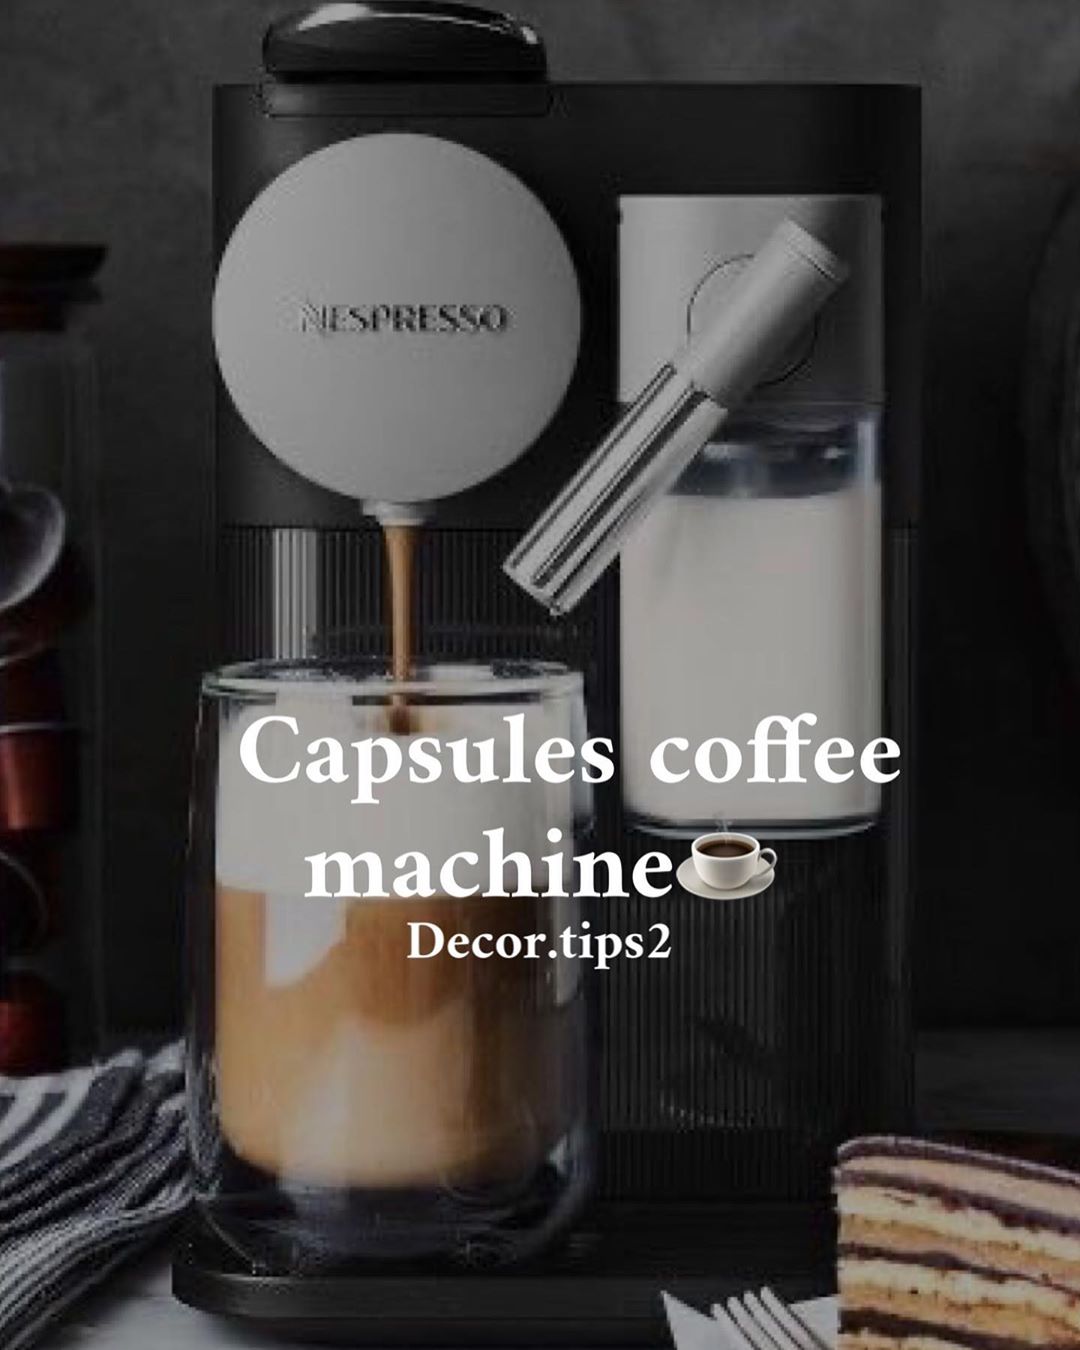 .
‫3- Capsules coffee machine : ‬
‫مثل الات نسبريسو او دولتشي. أسرع منها مافيه،